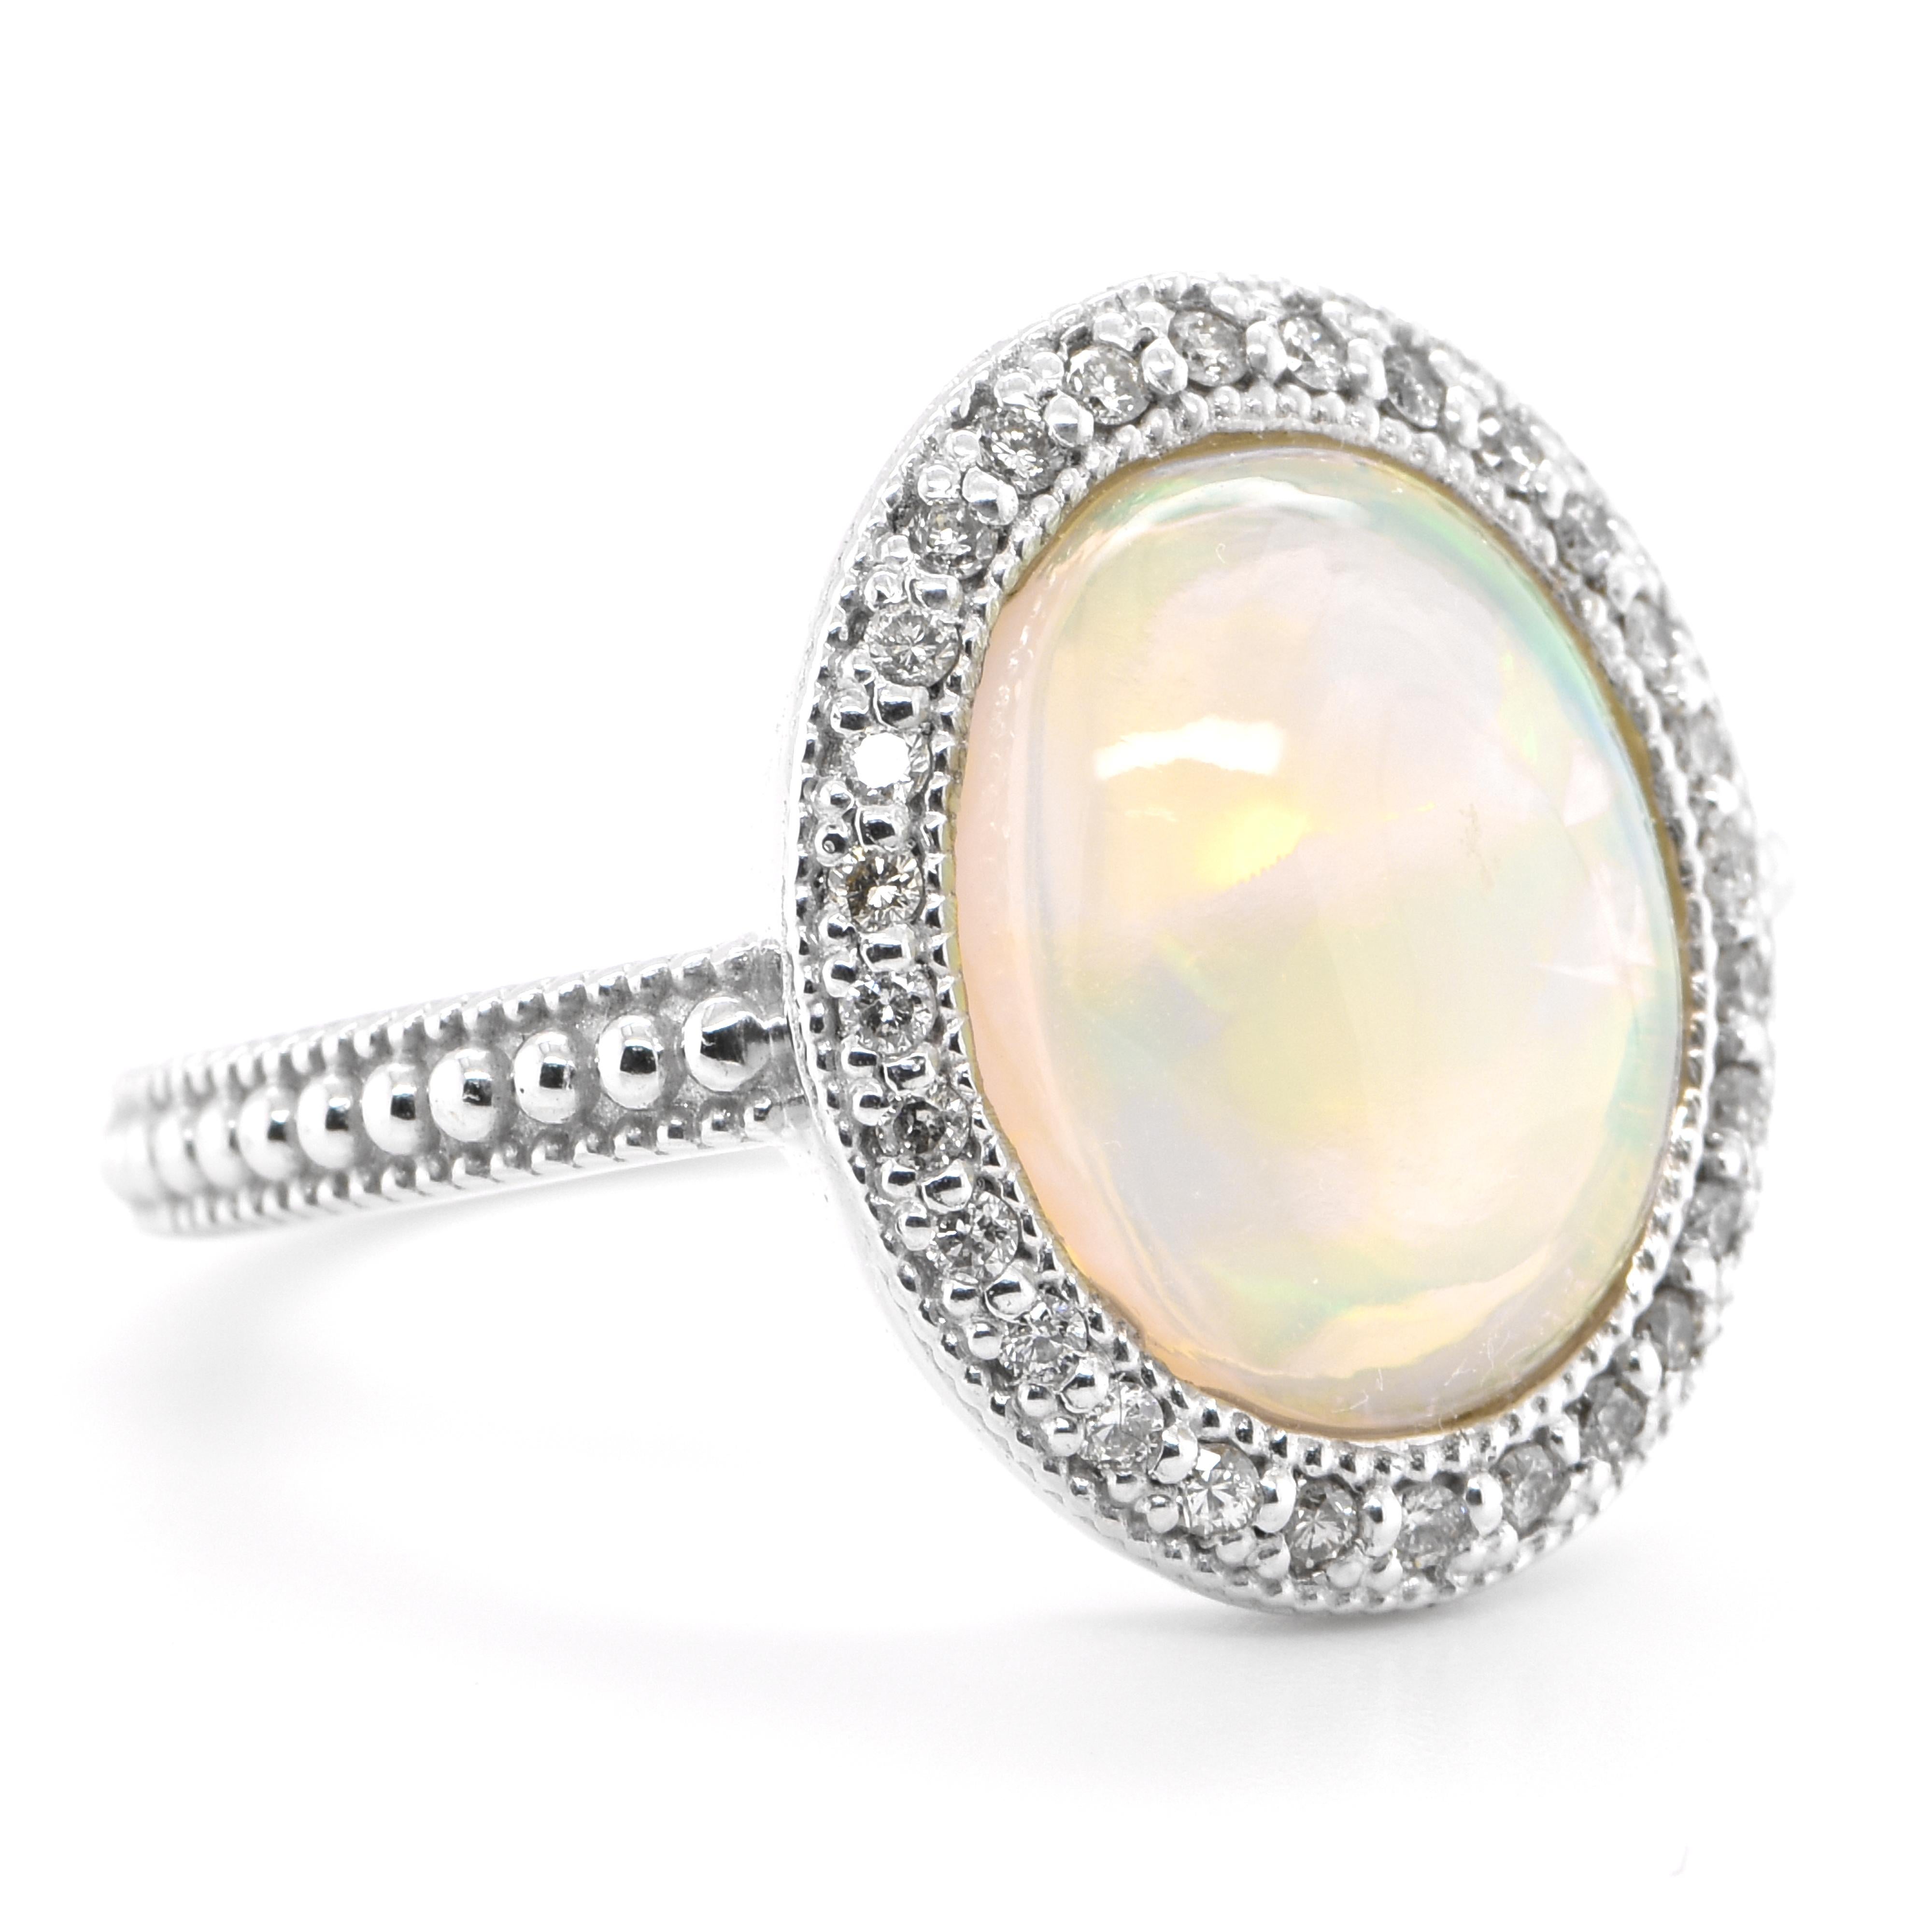 Modern 3.54 Carat Natural White Opal and Diamond Vintage Ring Set in 18K White Gold